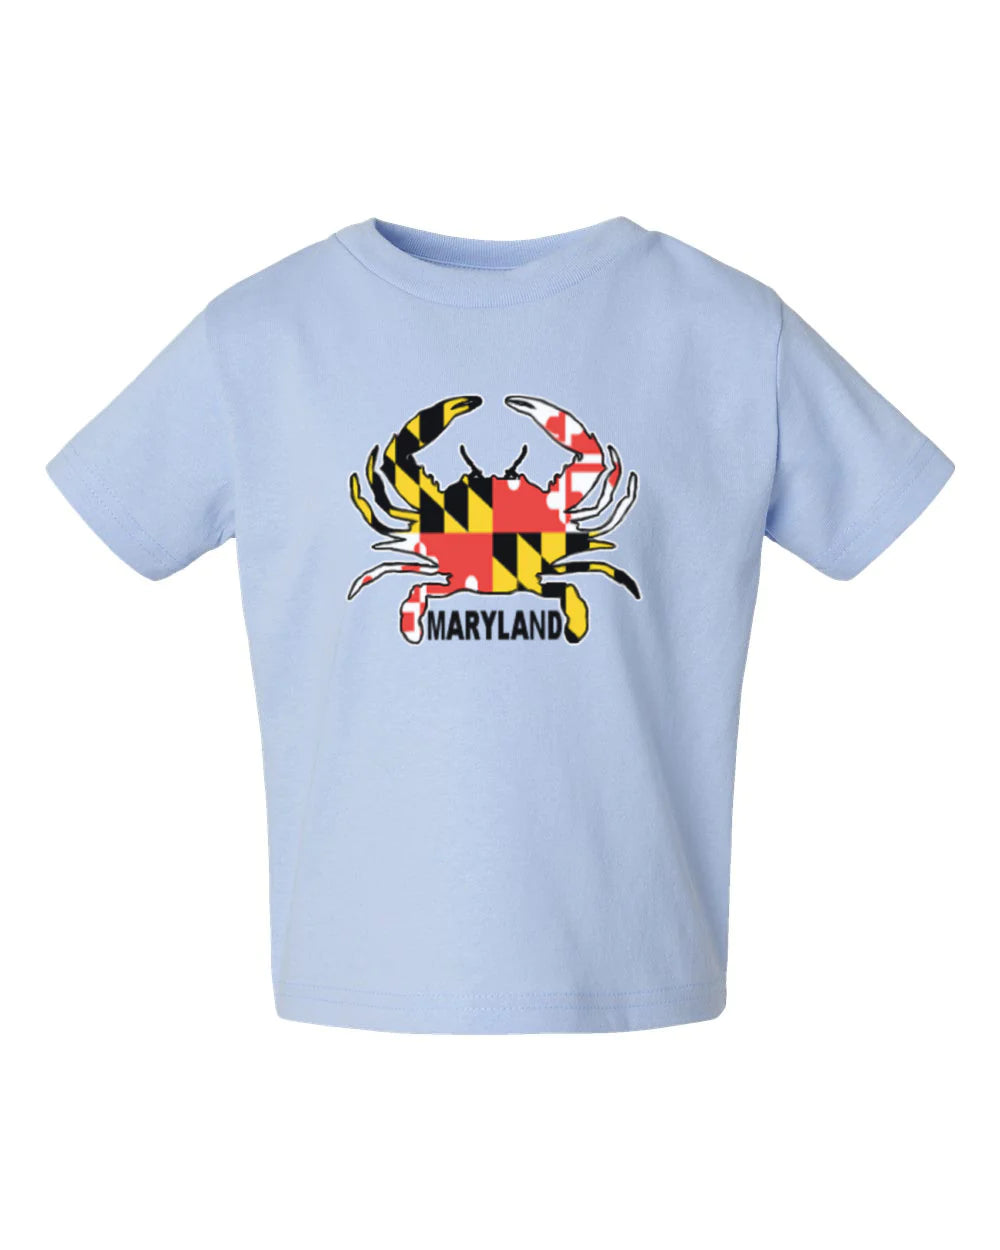 Maryland Crab Baby T-Shirt (Baby Blue)